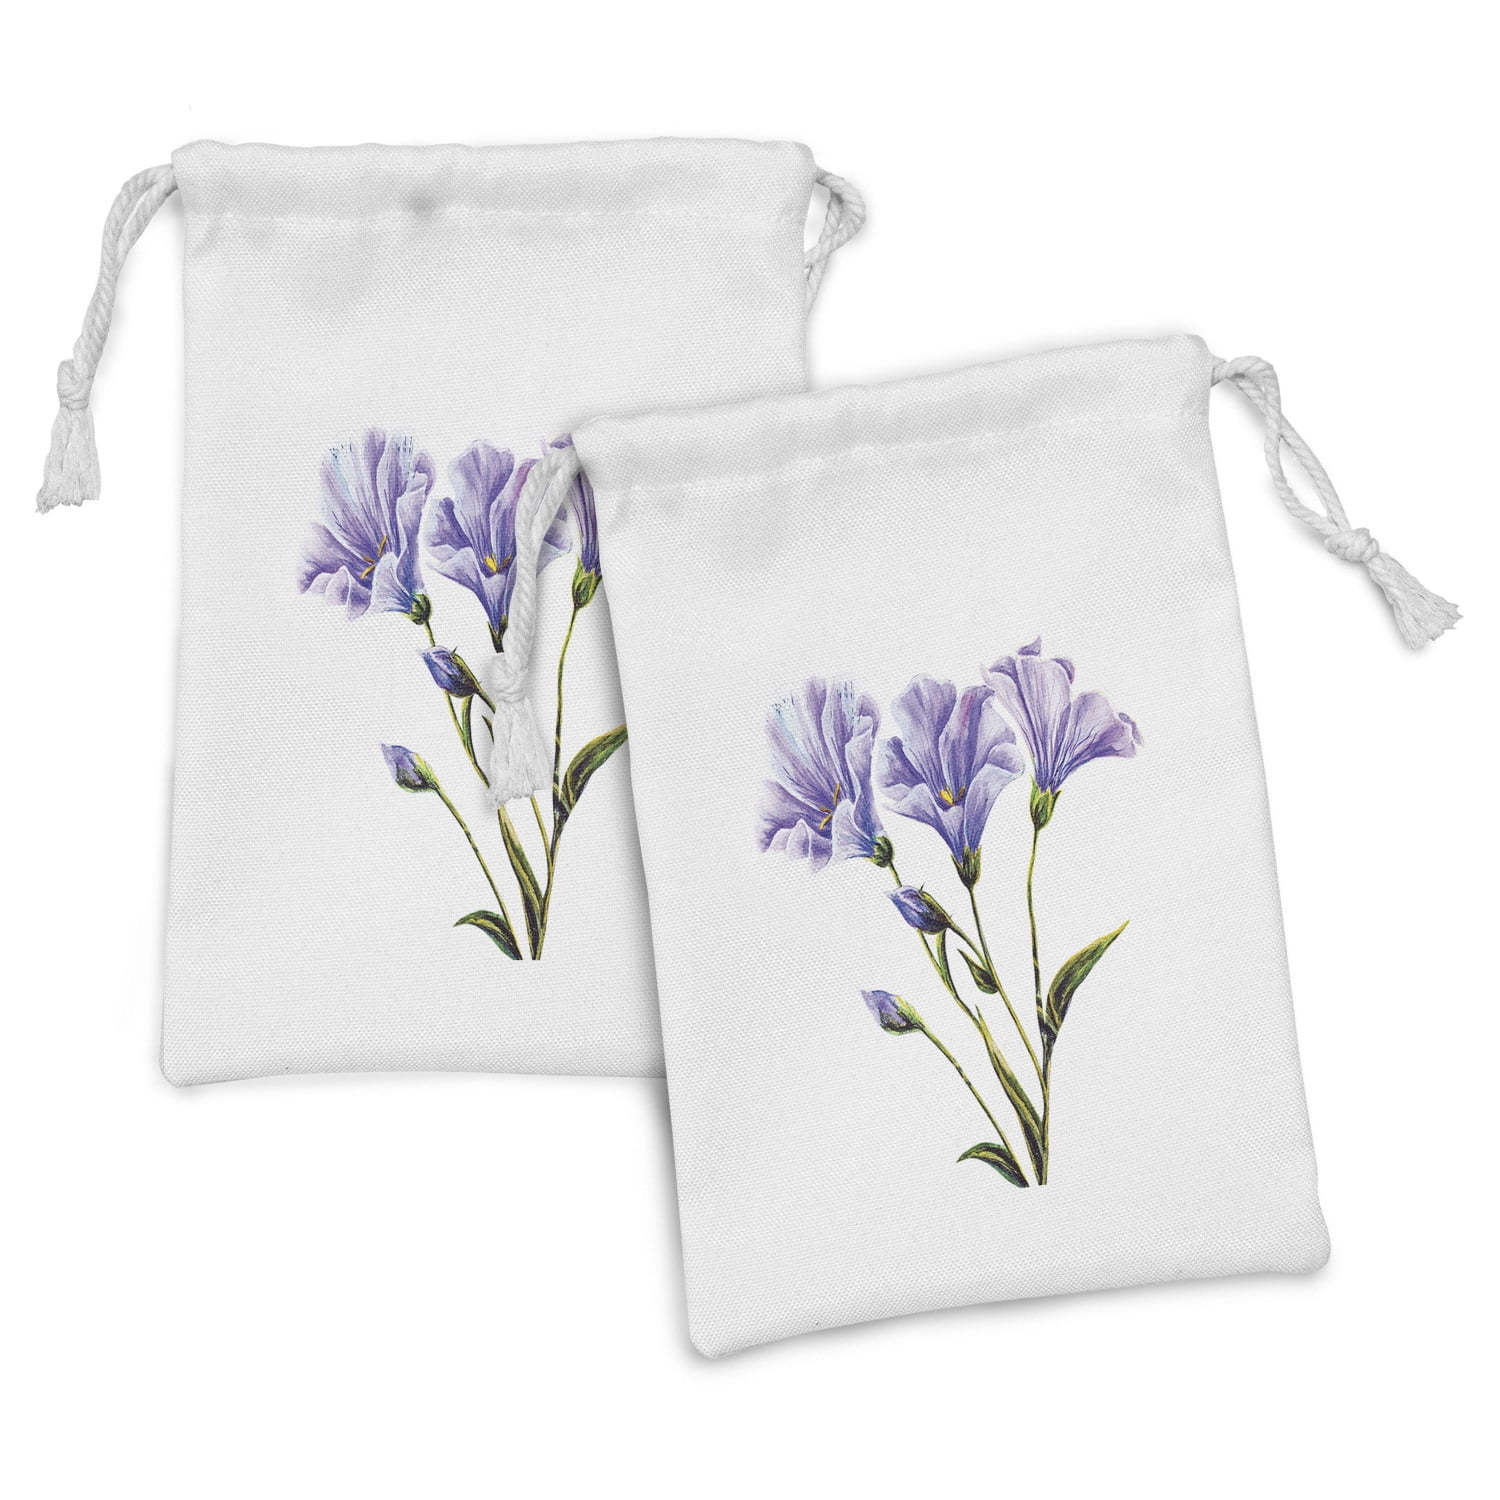 White Cotton Linen Sachet Bags Embroidered Lavender Flowers Birds Pouch 